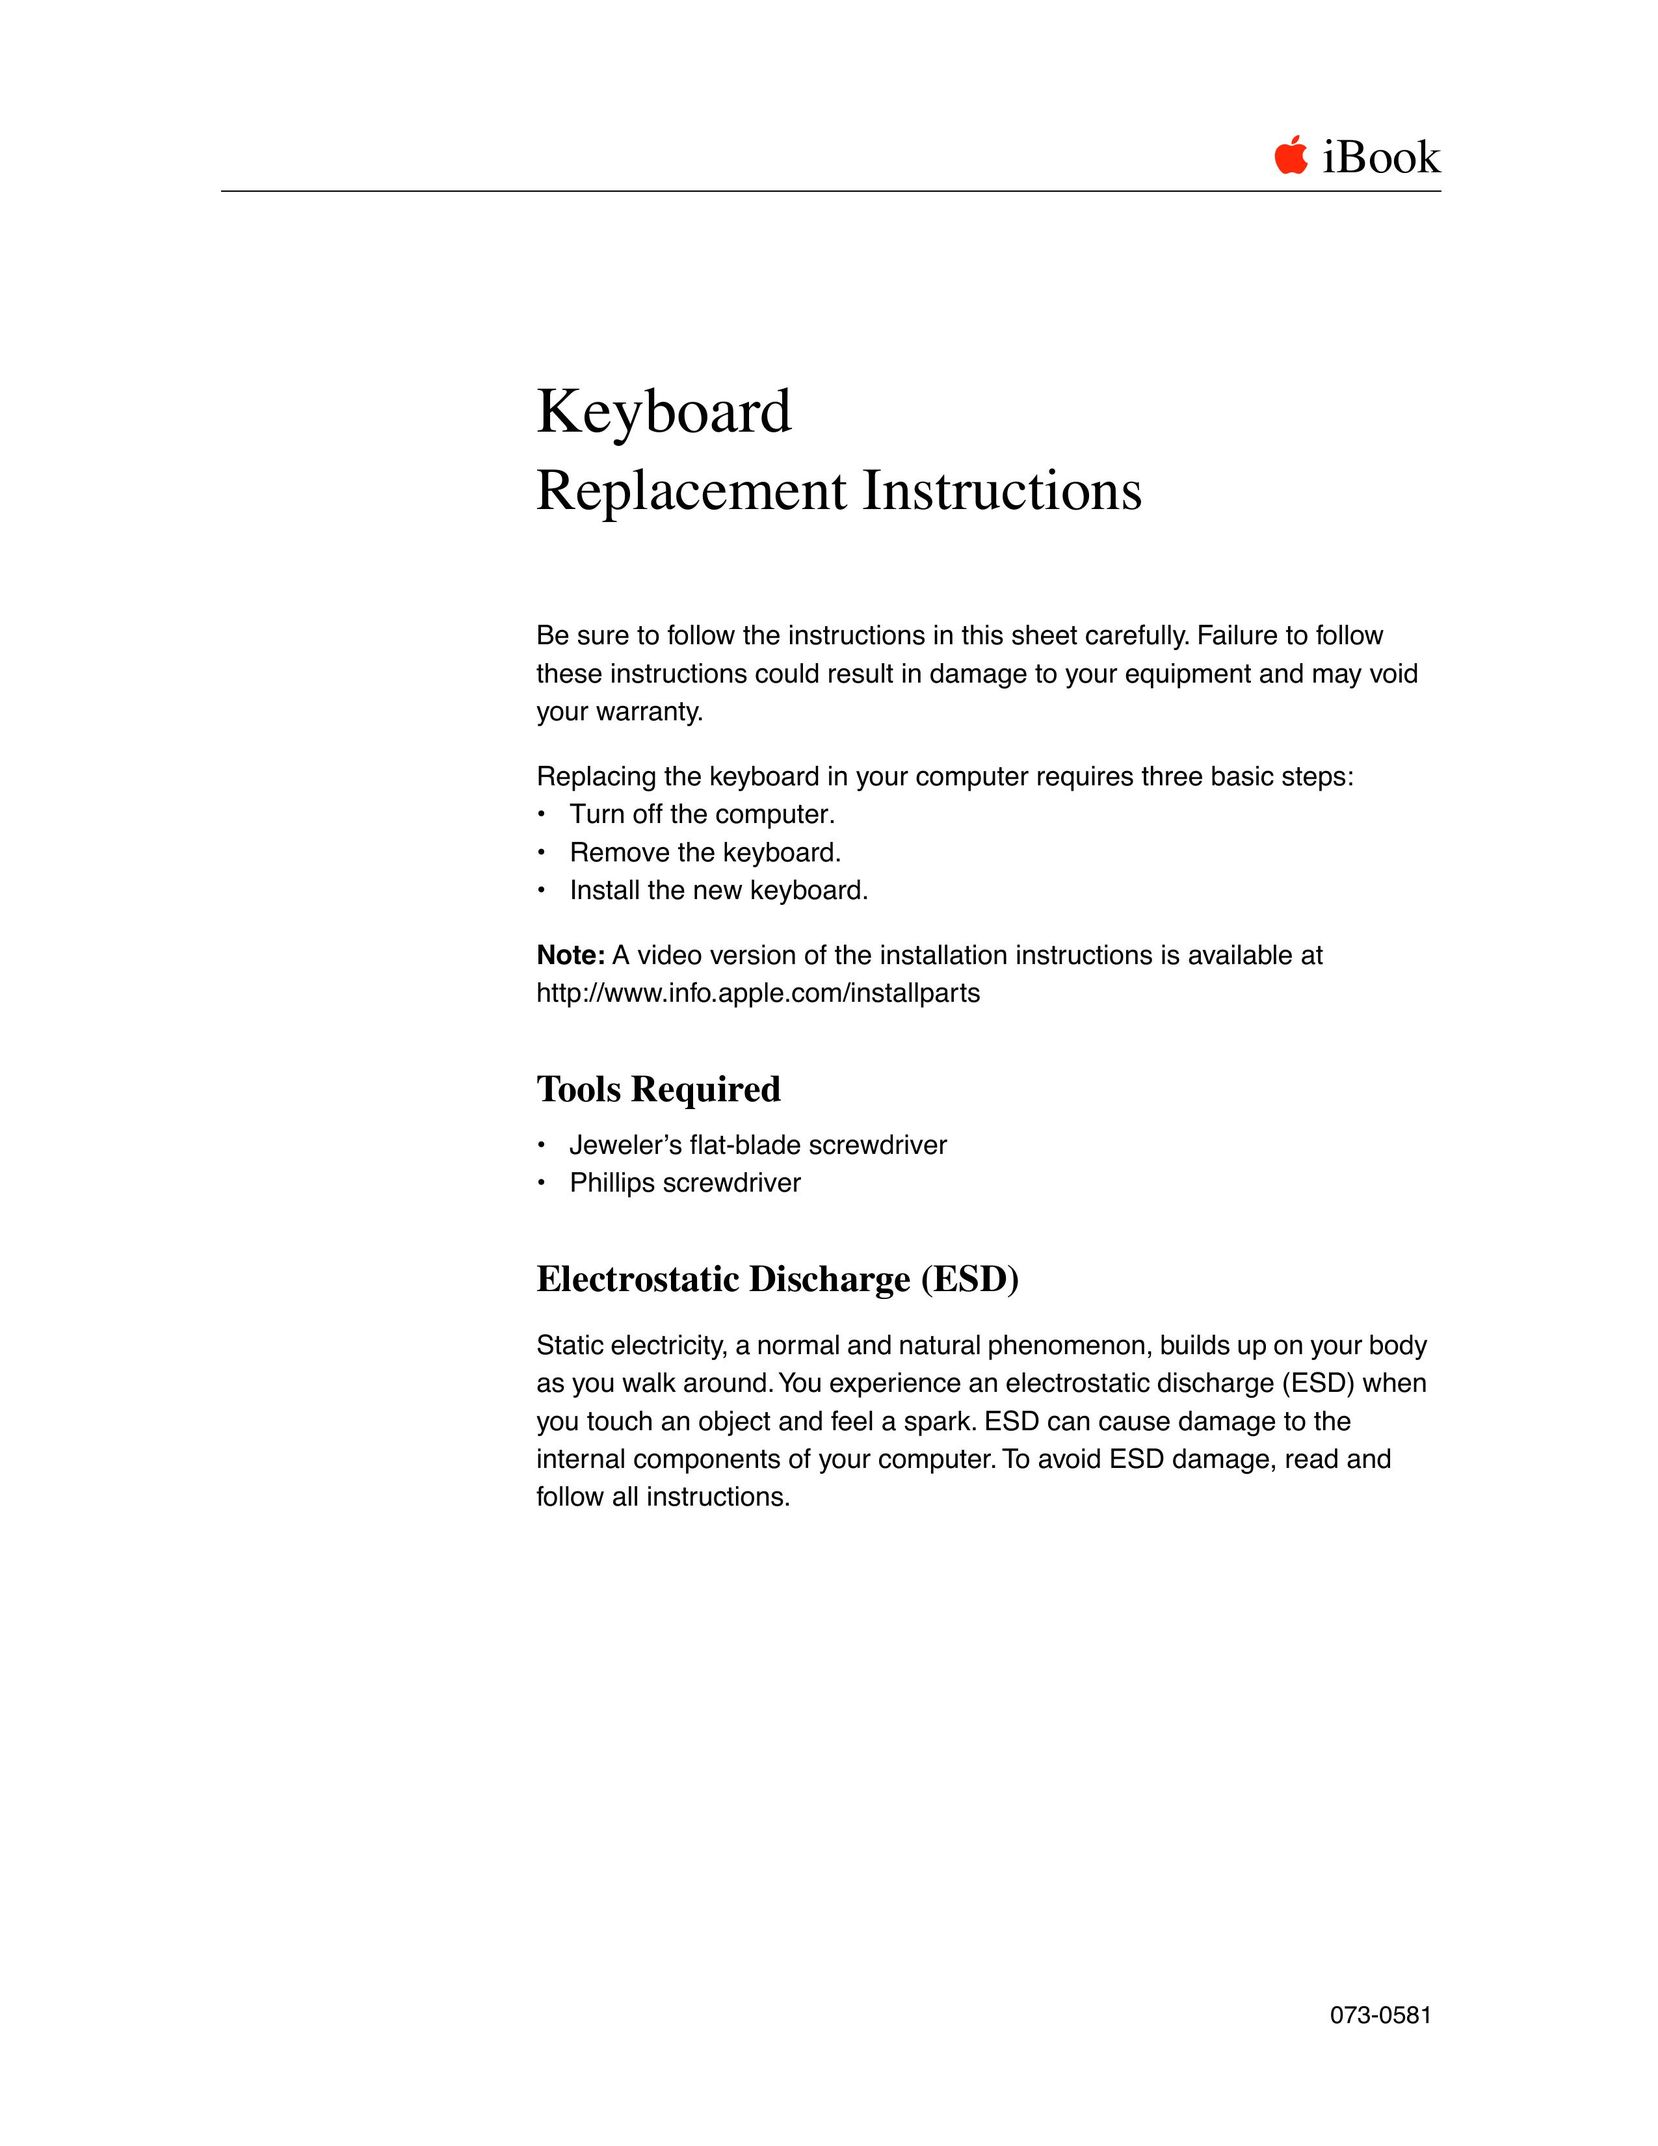 Apple 073-0581 Computer Accessories User Manual